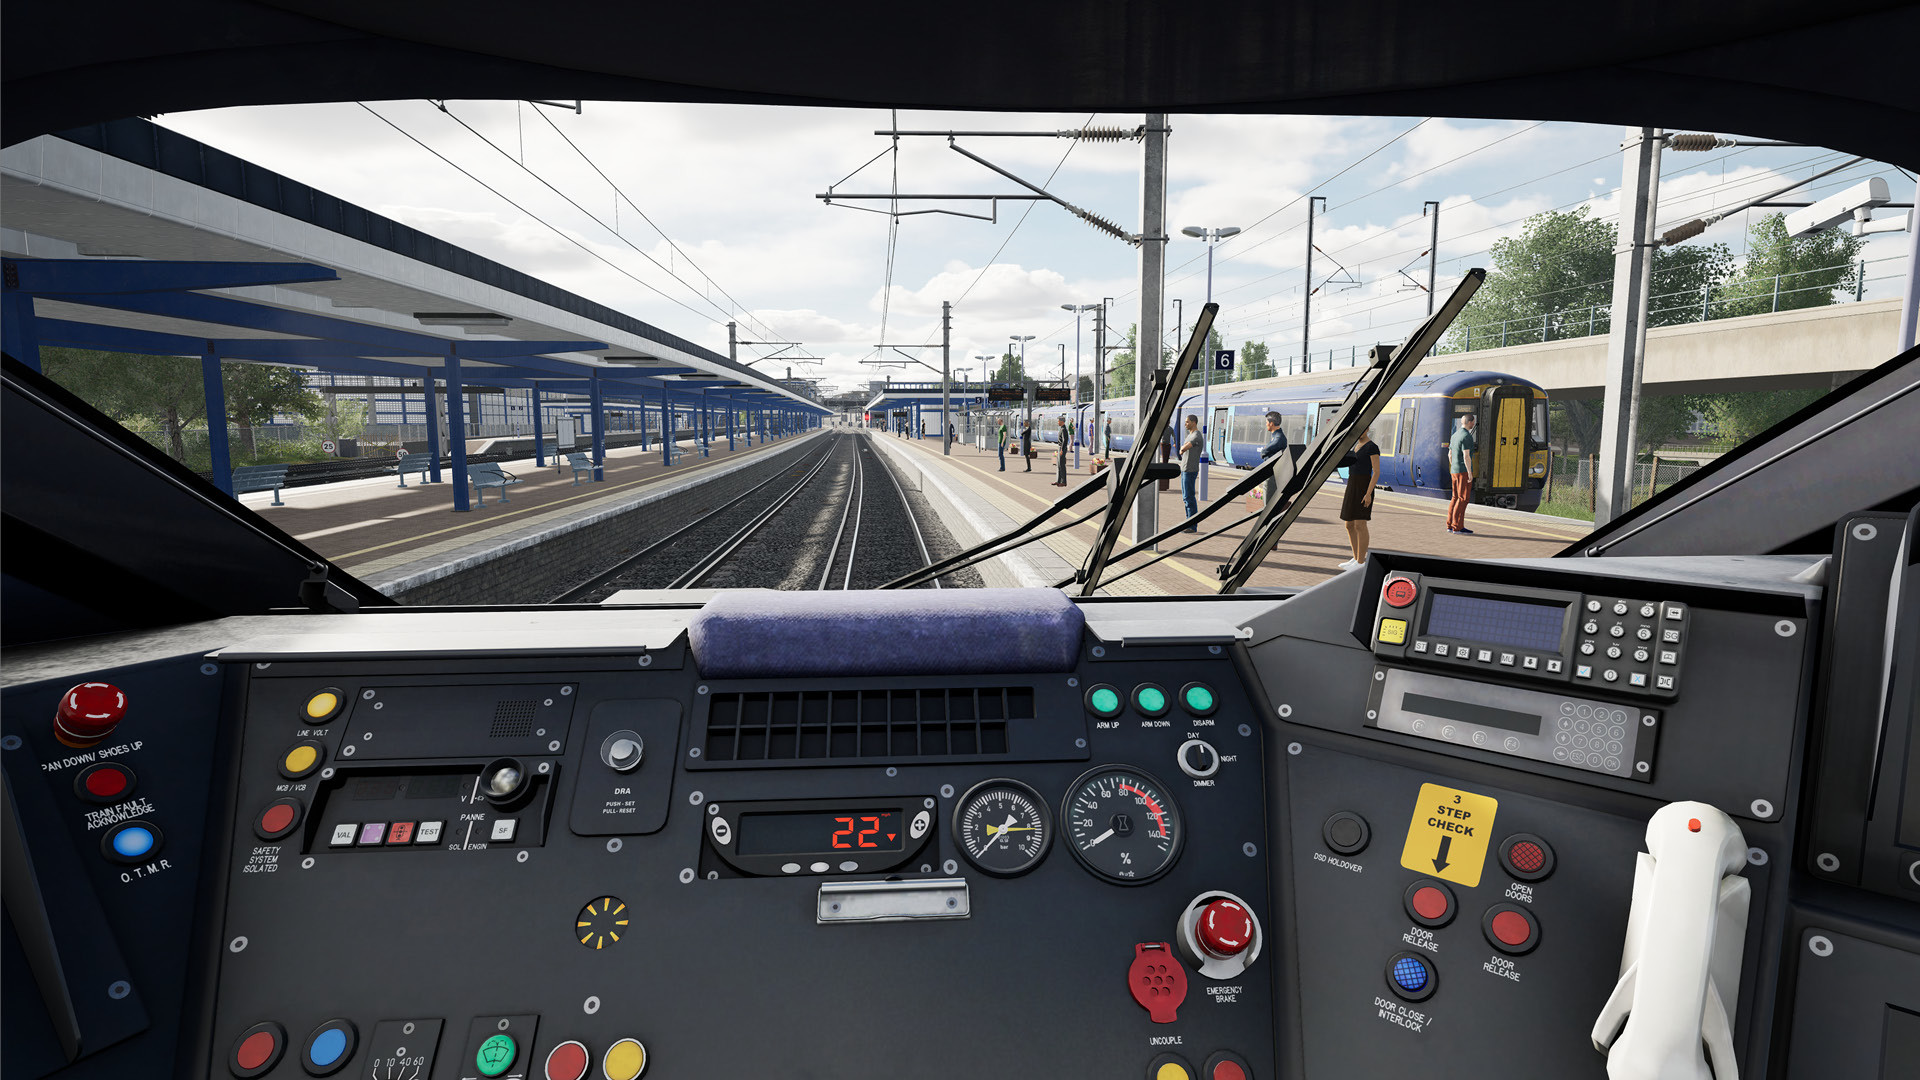 download Train Sim World 3 via torrent